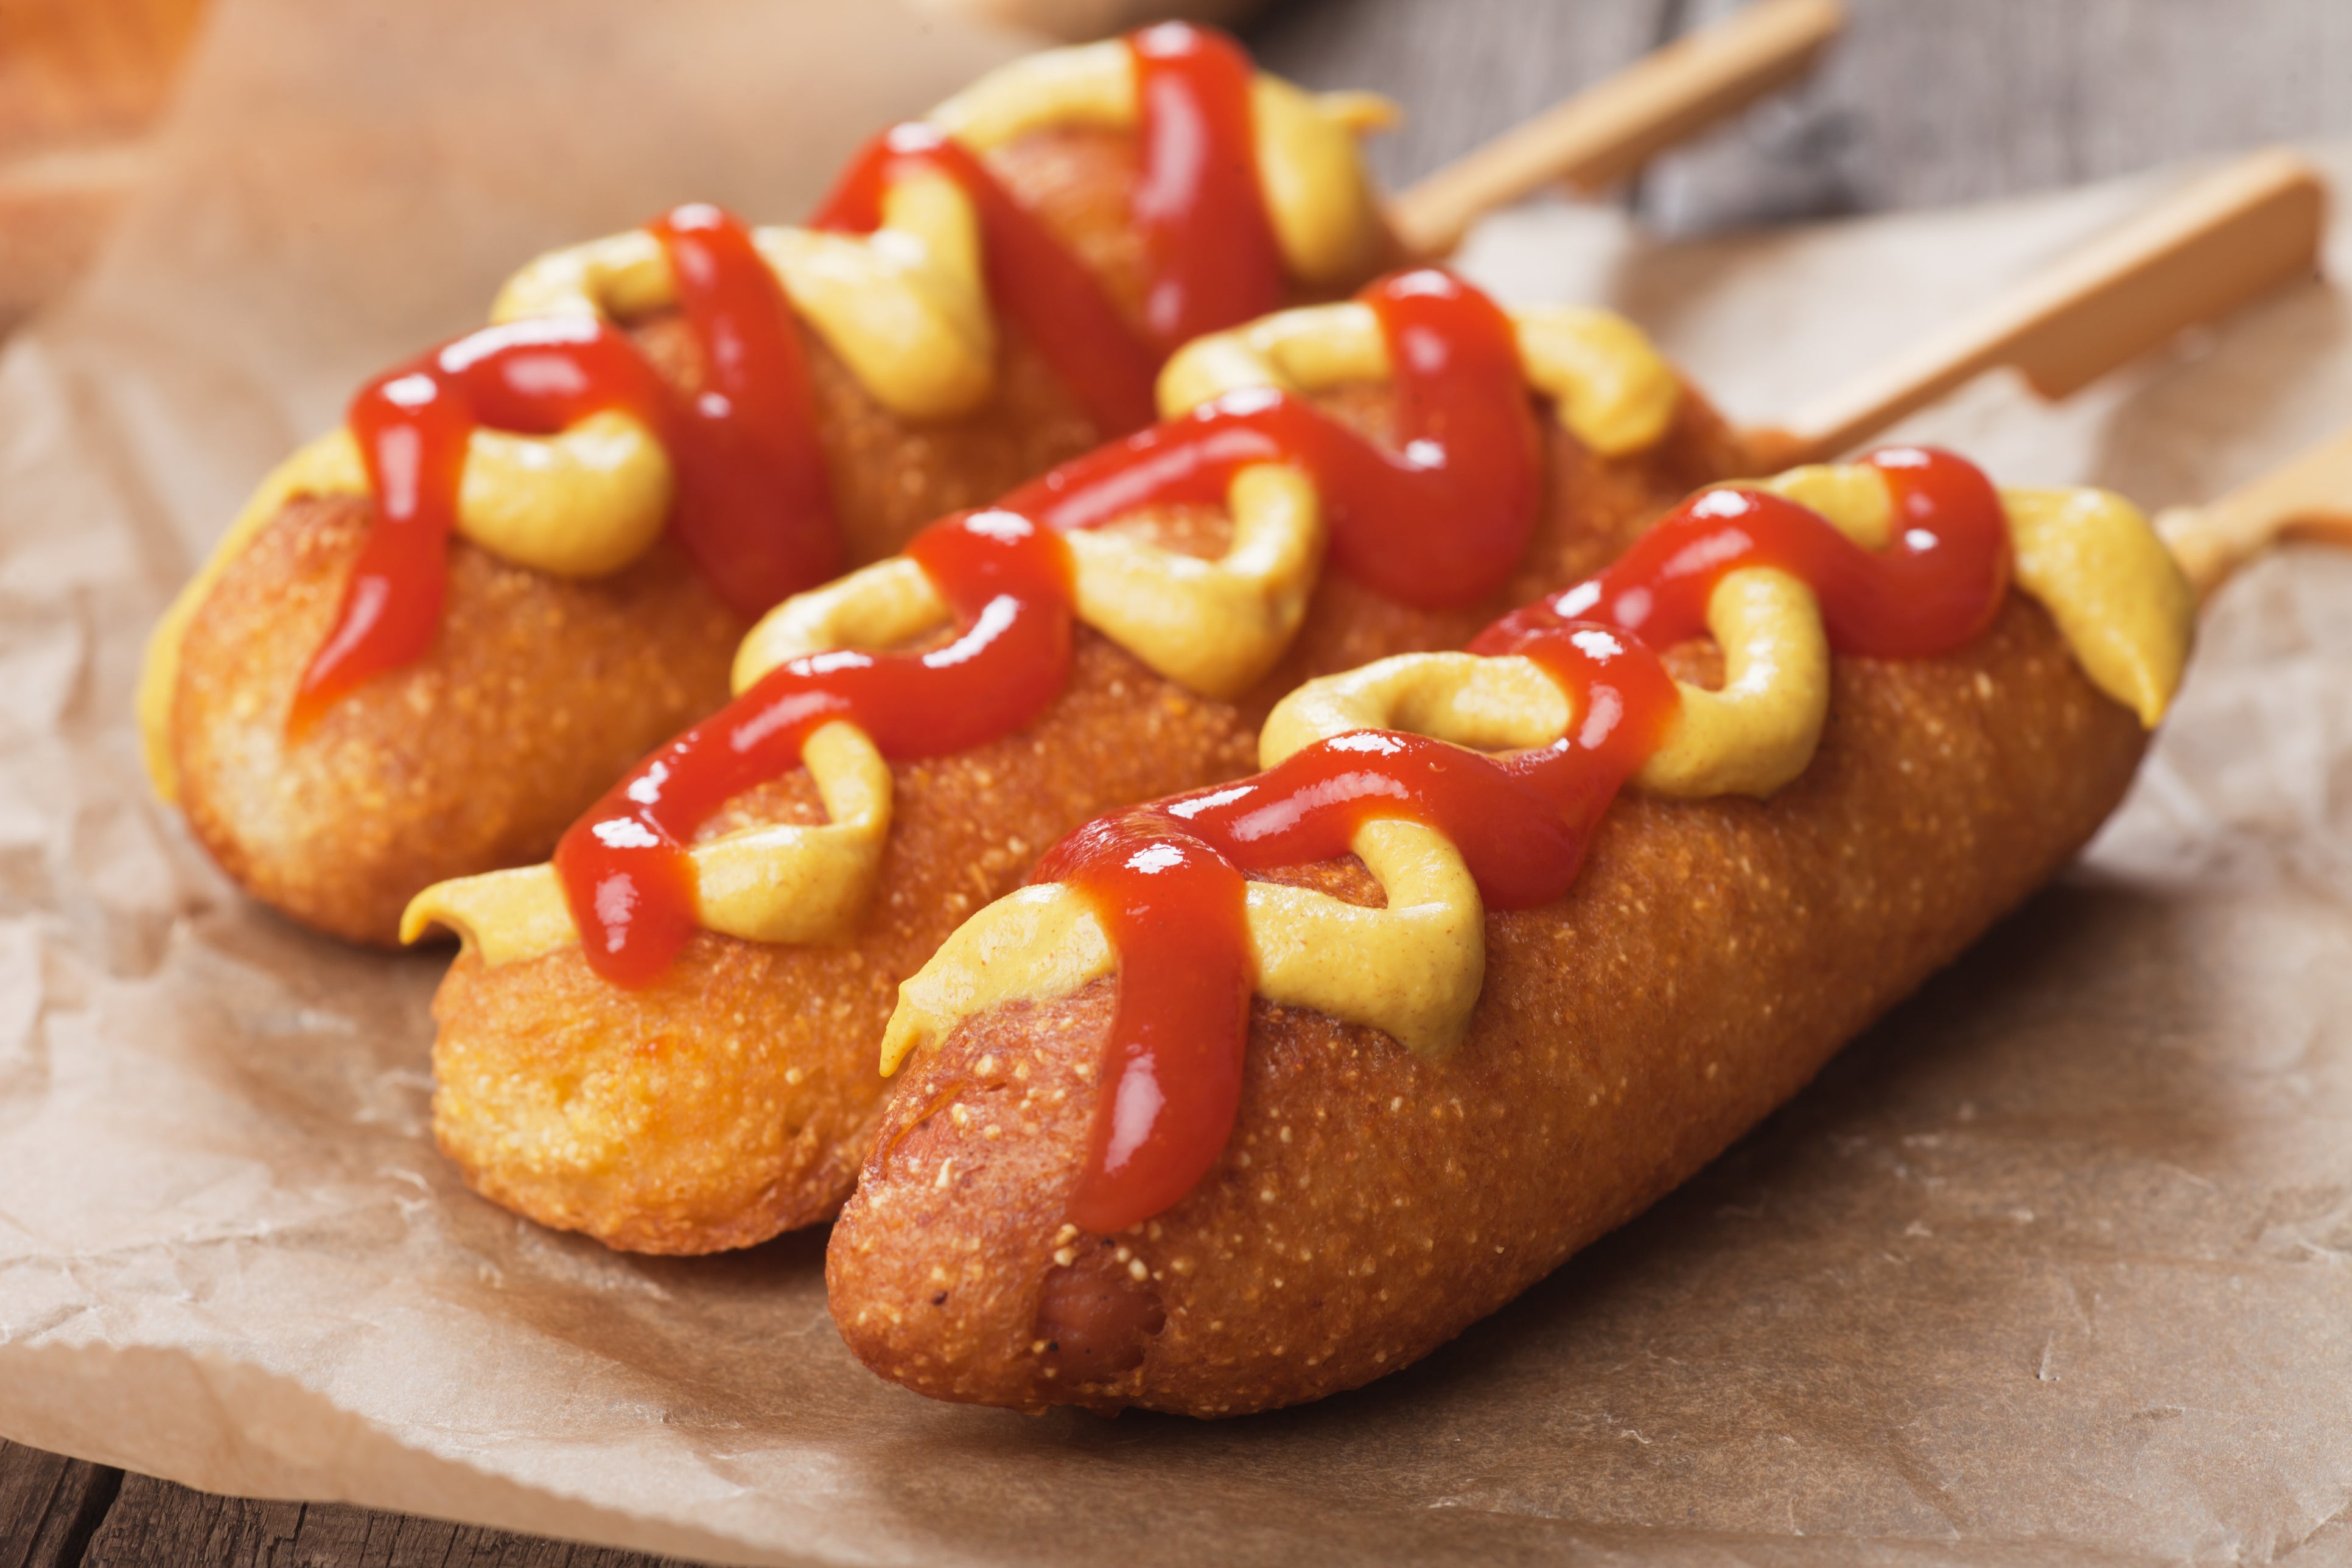 Imagine a hotdog on a stick with a thick layer of deep-fried cornmeal